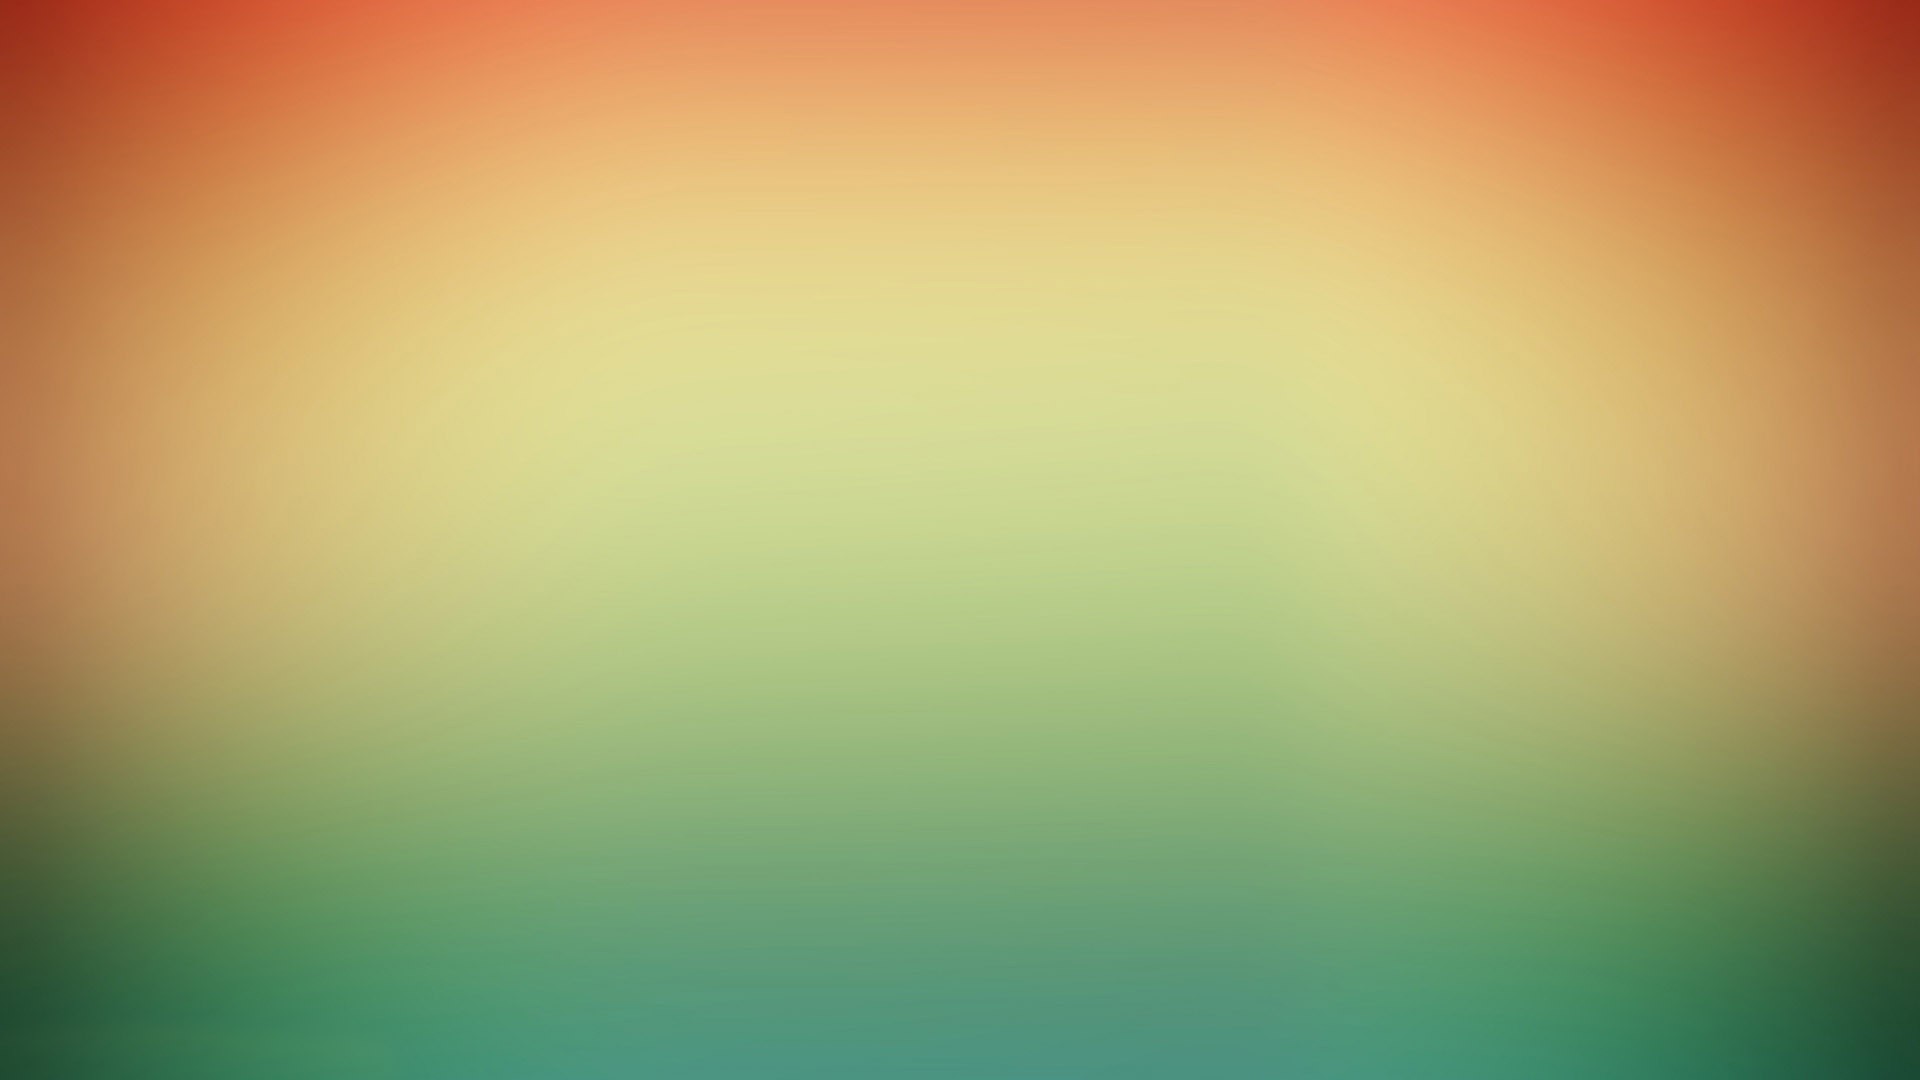 1920x1080 Green and orange gradient wallpaper #9814